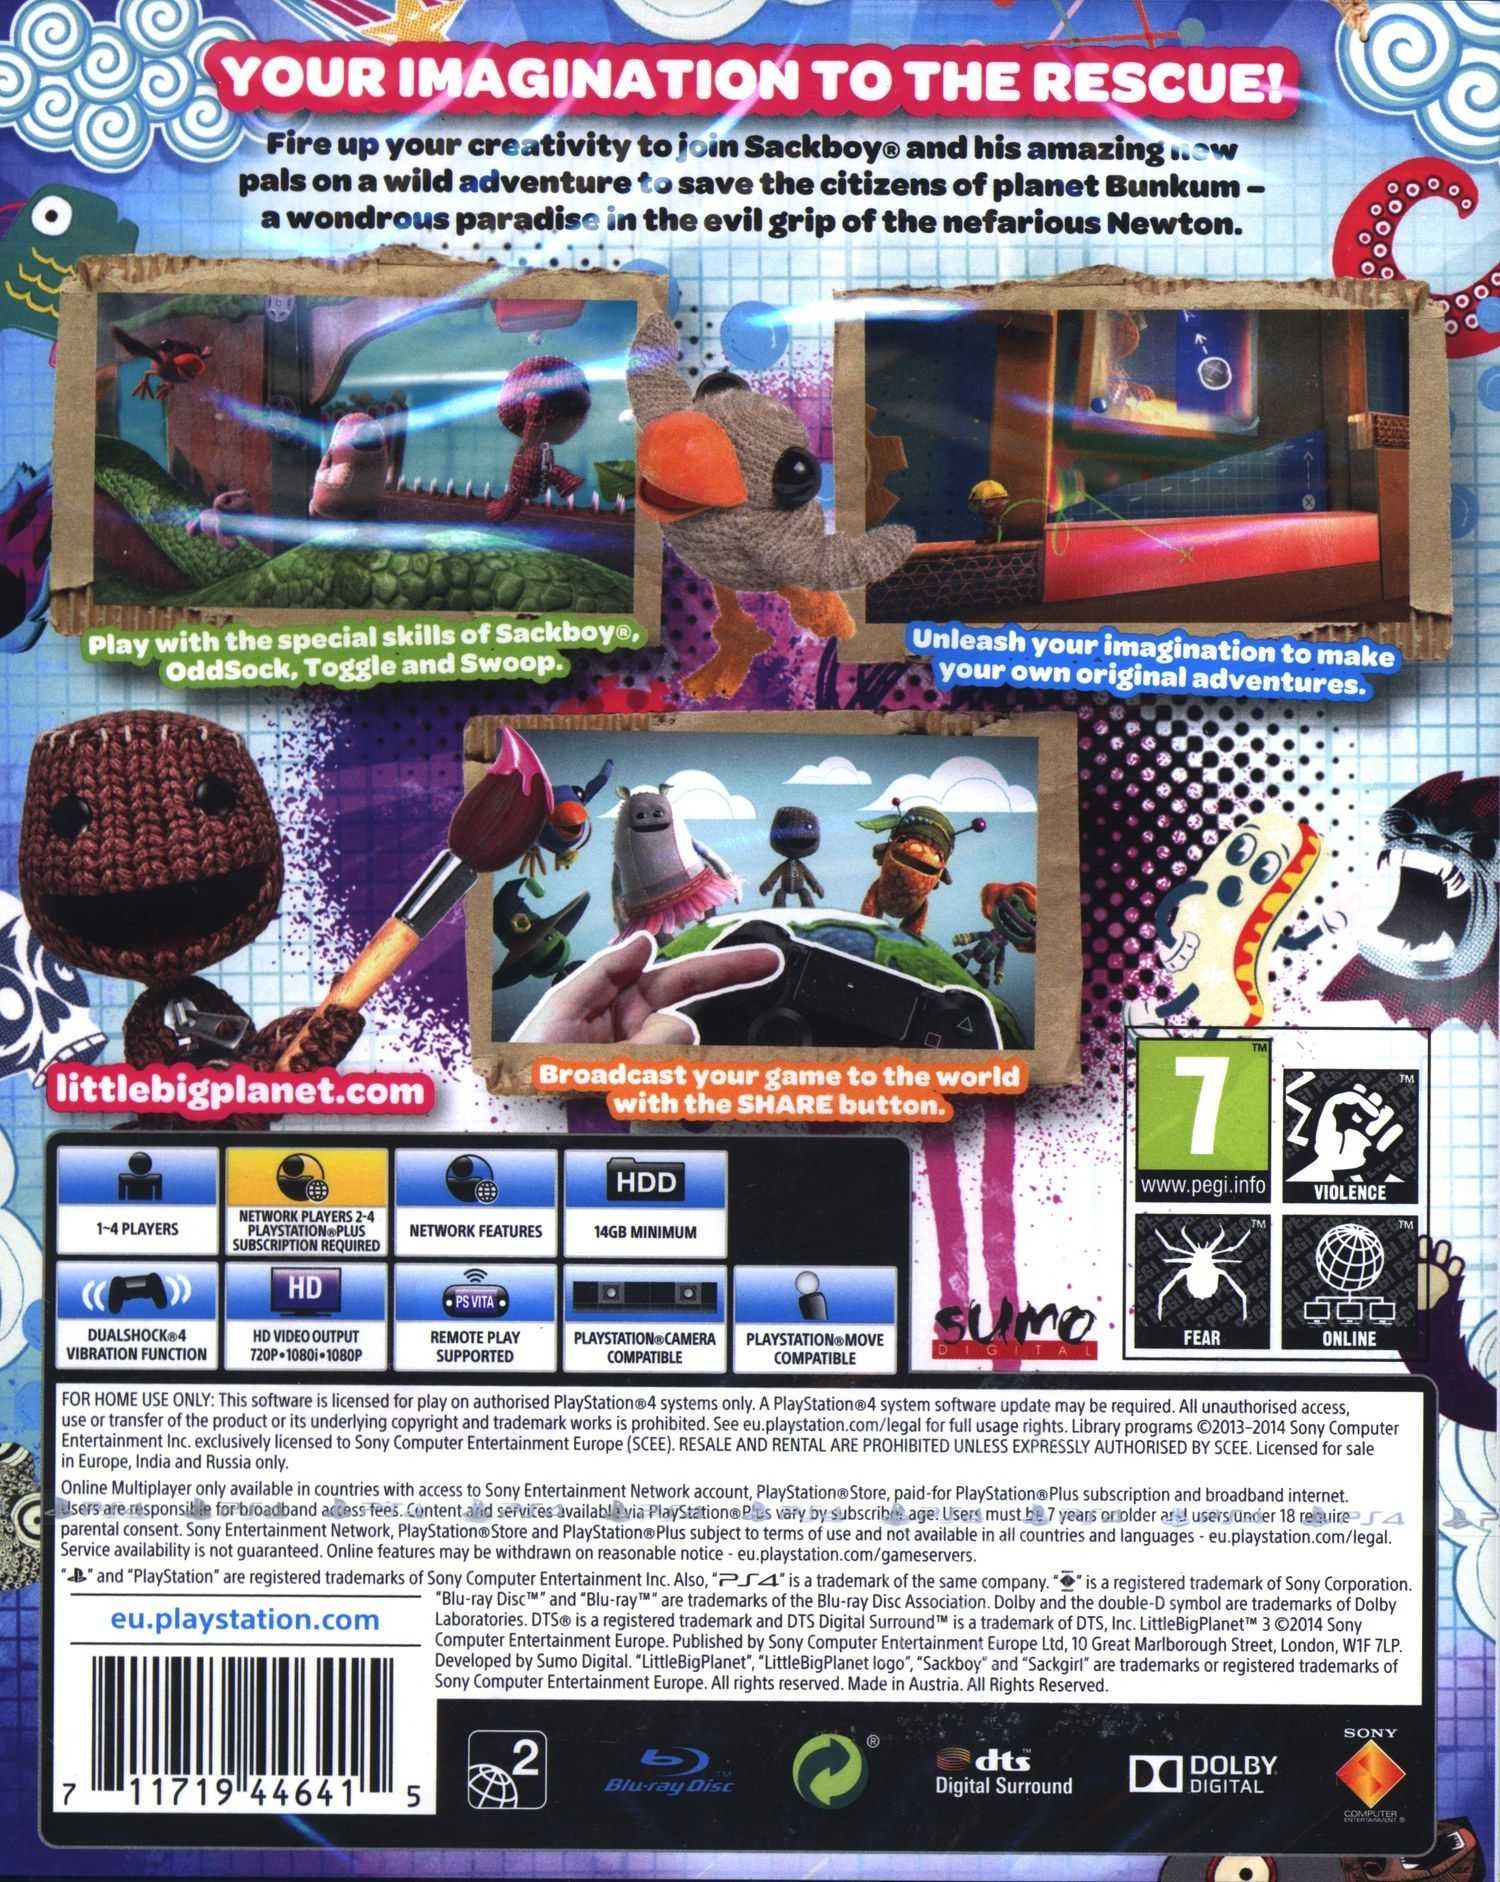 LittleBigPlanet 3 , Игра ,Playstation , PS4  PS5 , нова , налична